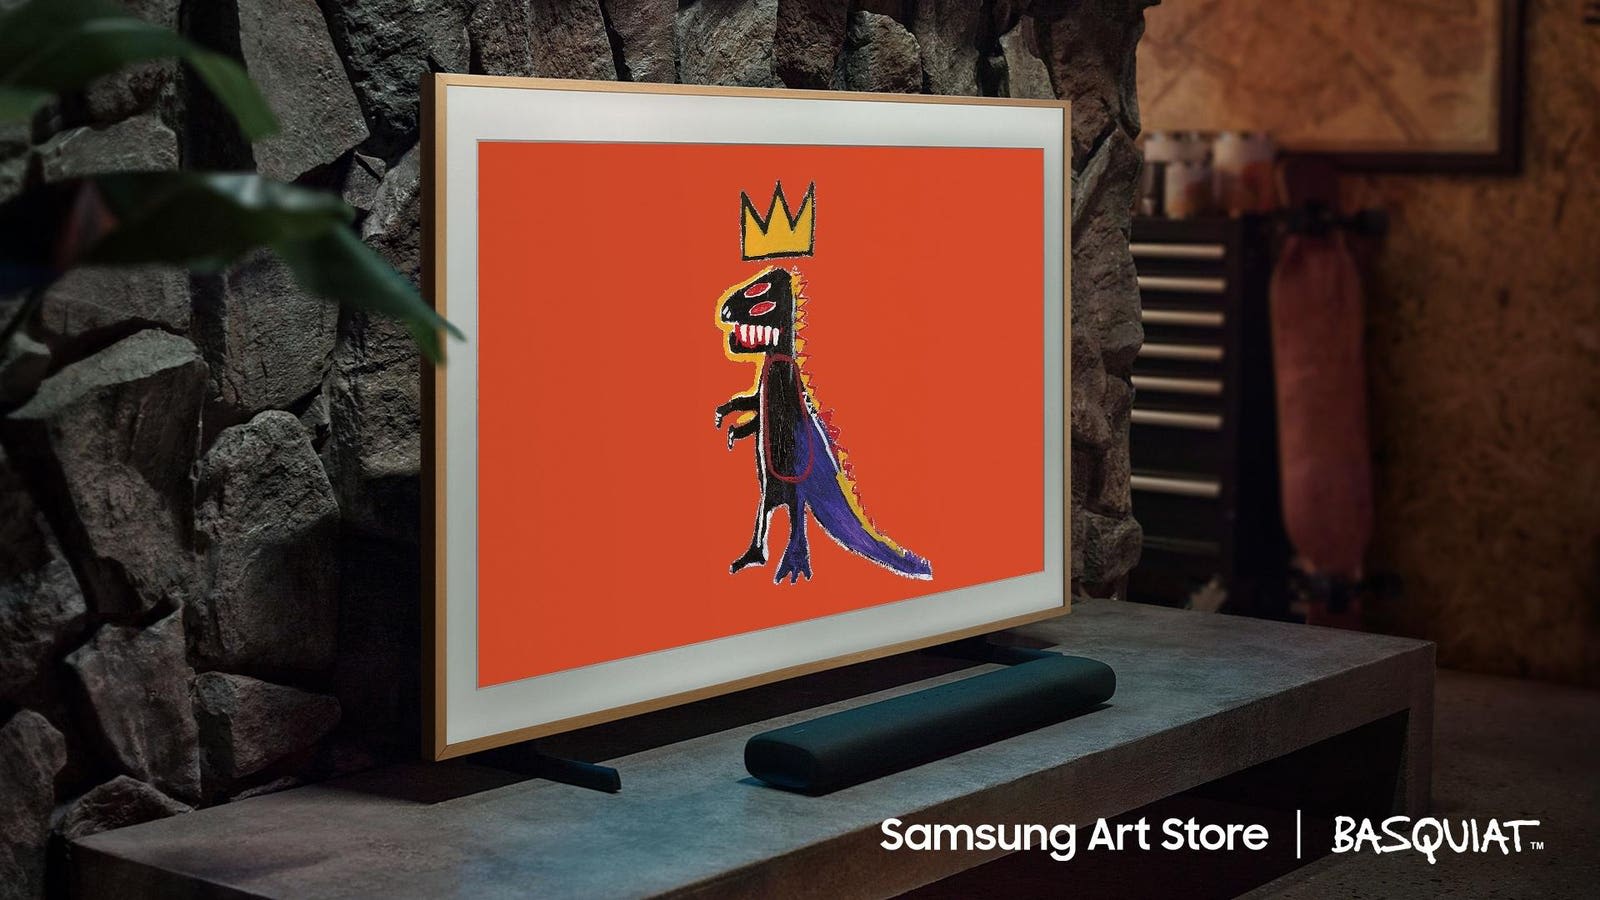 Why You See Basquiat Everywhere